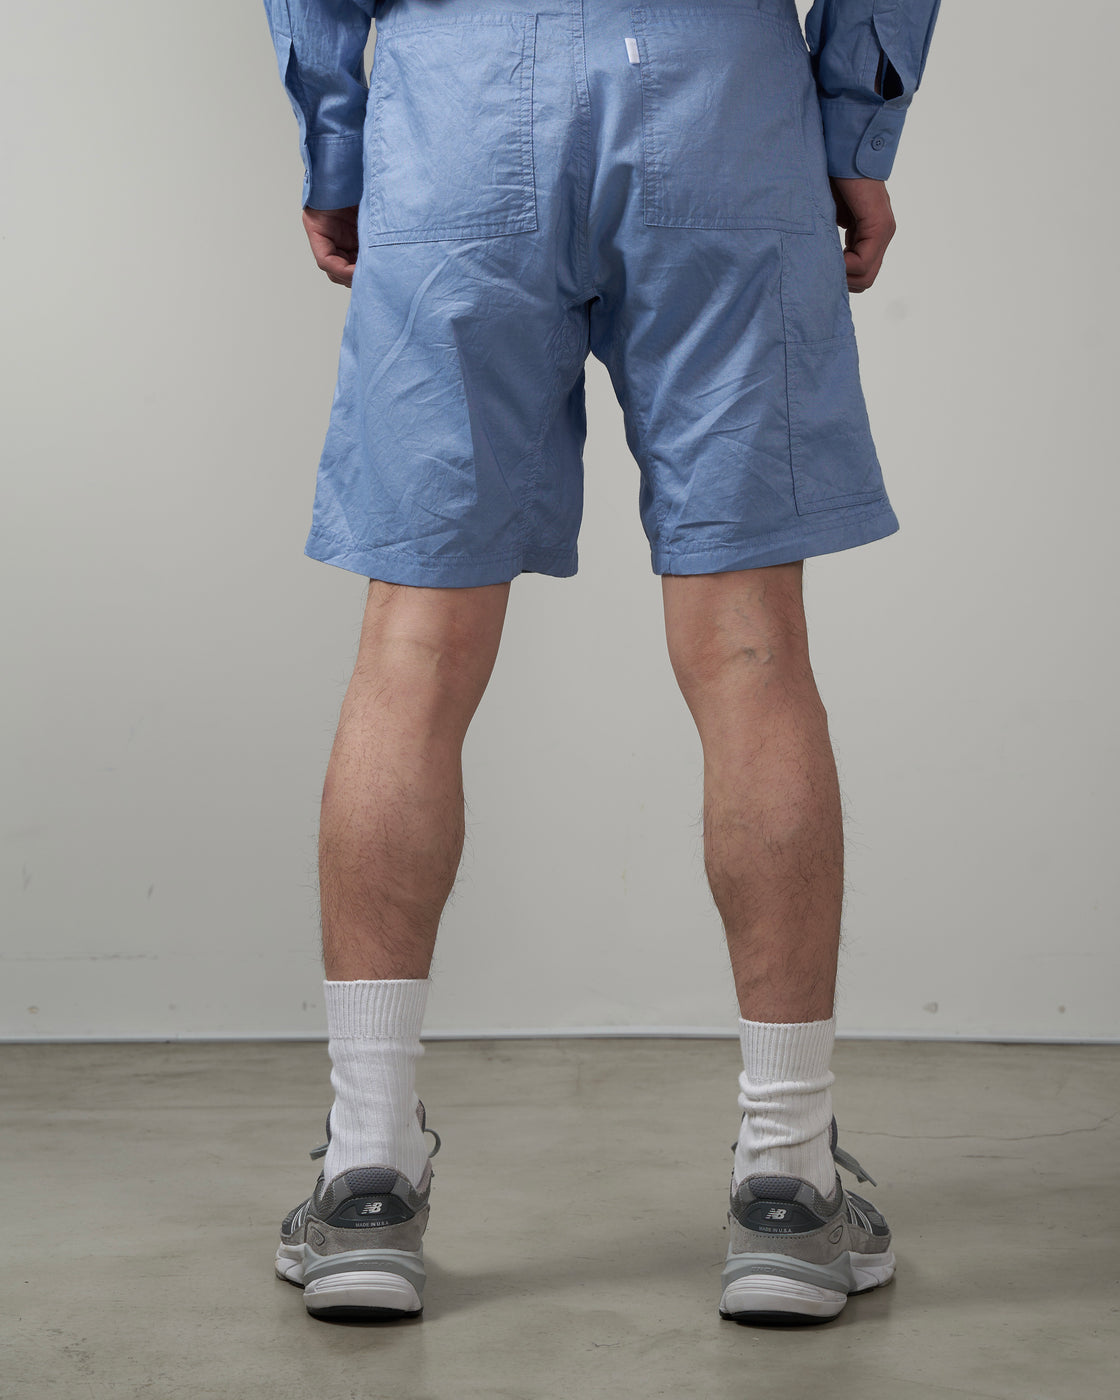 S H DKNS-003 Double Knee Shorts, Blue